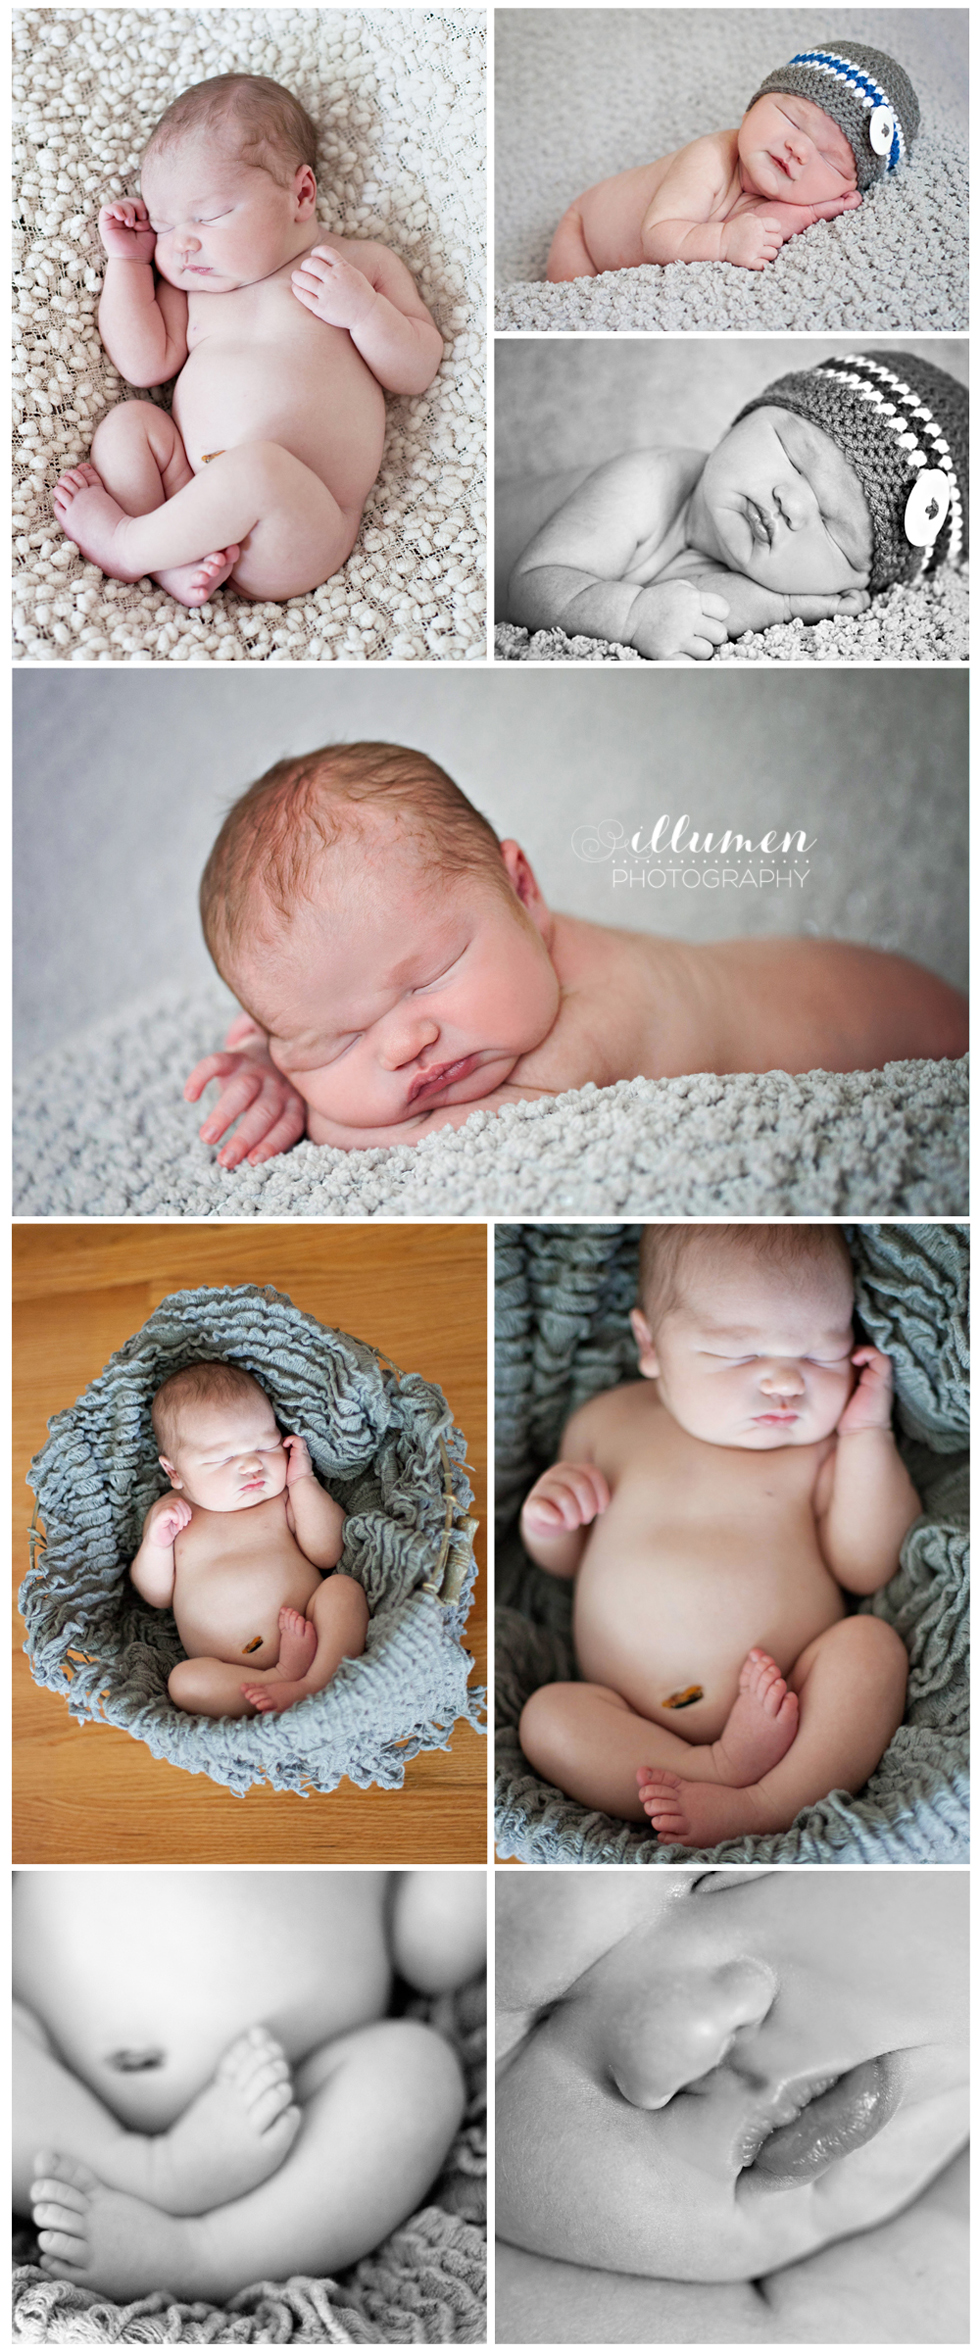 St. Louis Newborn Photography, www.illumenphotography.com